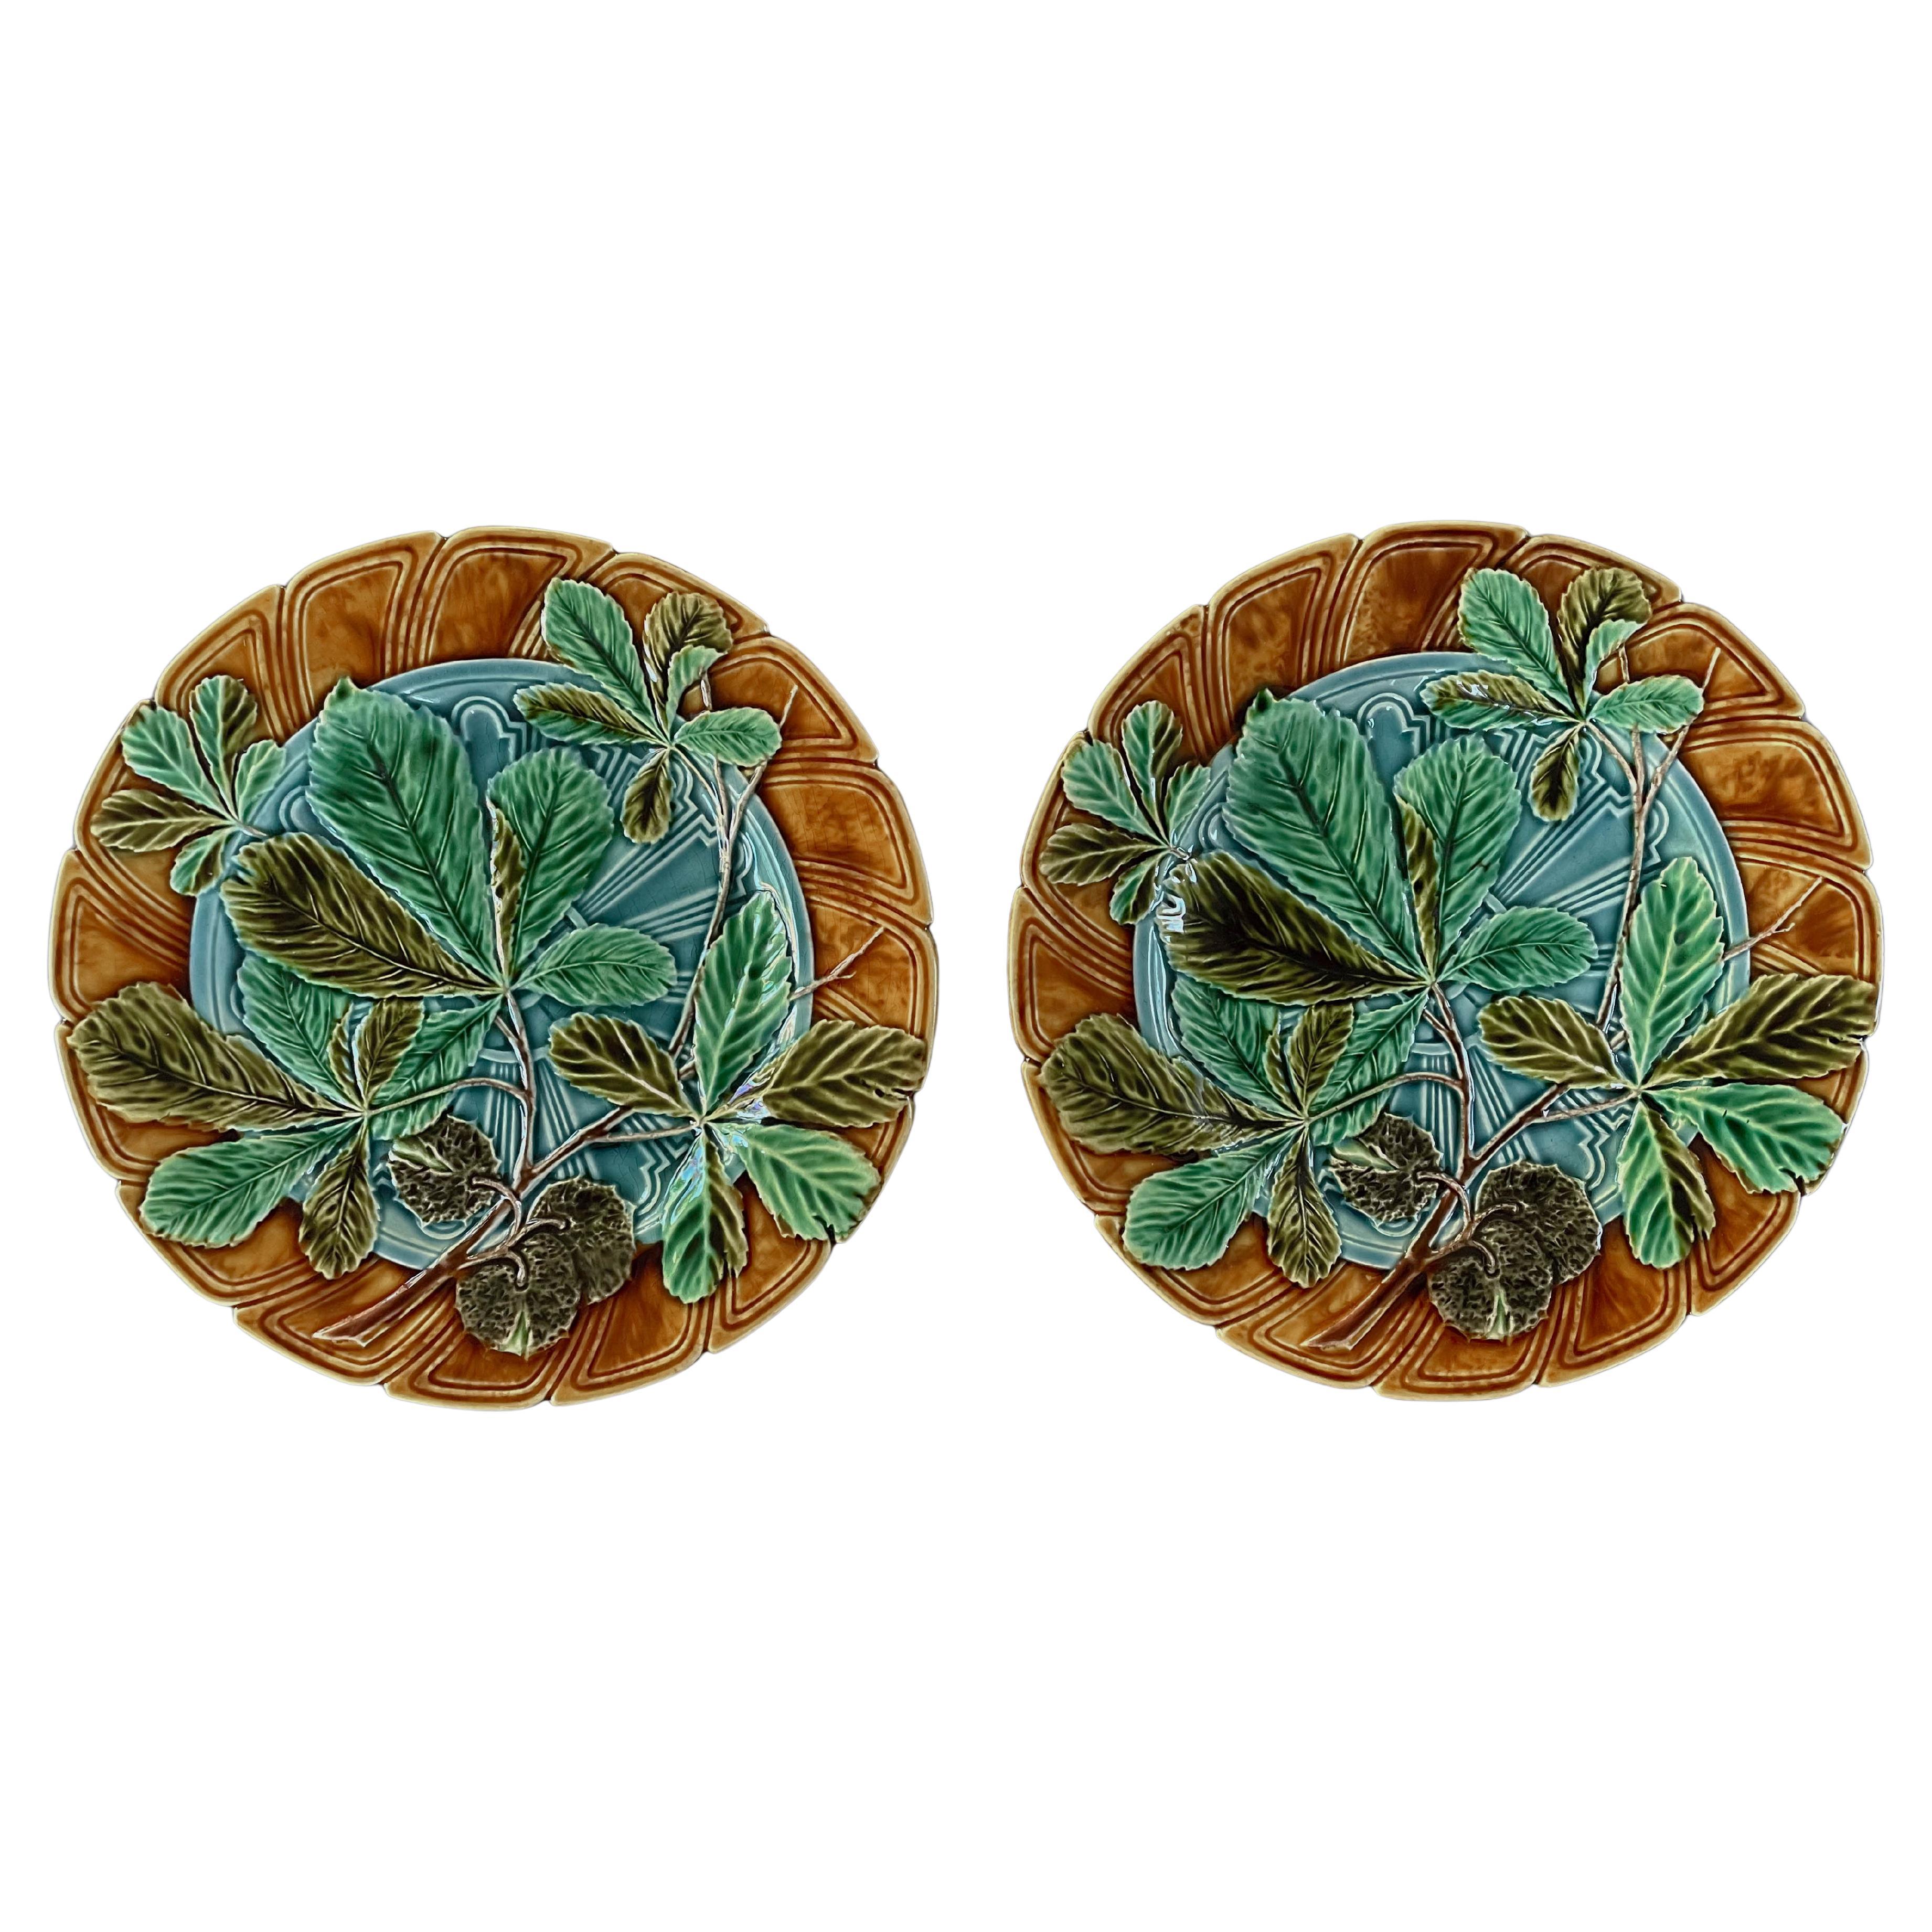 Sarreguemines Majolika-Blattteller aus Kastanienholz aus dem 19. Jahrhundert, ein Paar